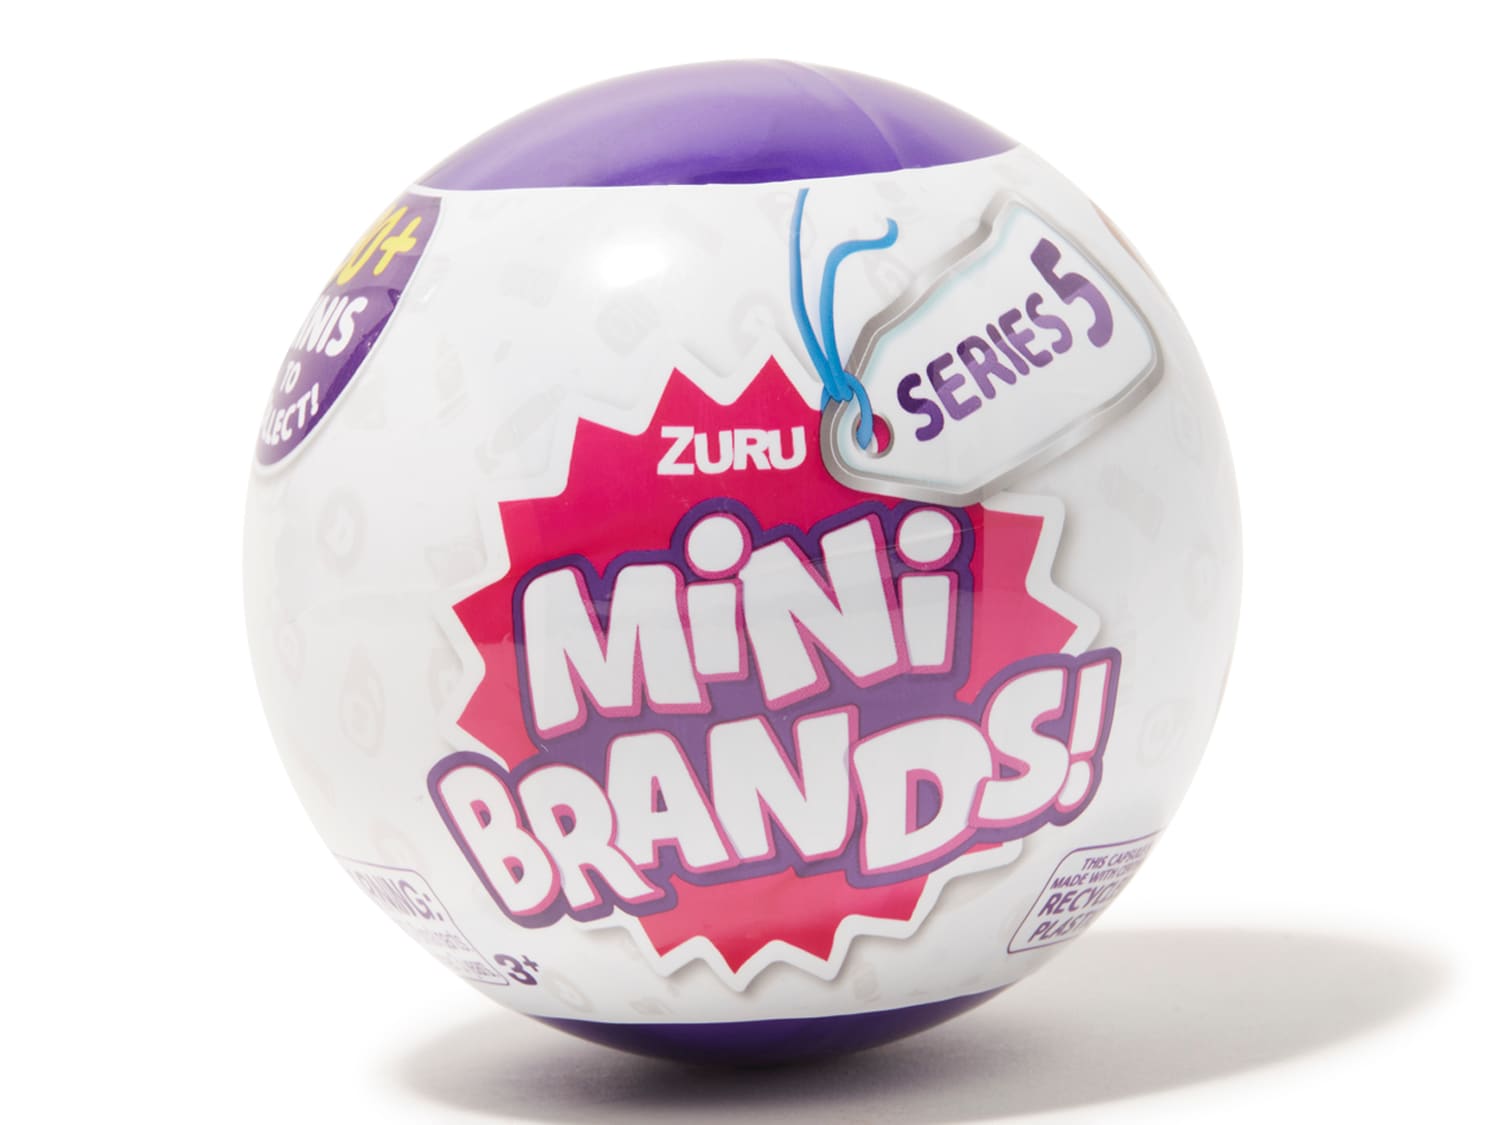 5 Surprise Mini Brands! Series 3 (Collectors Case Plus 2 Mystery Balls)